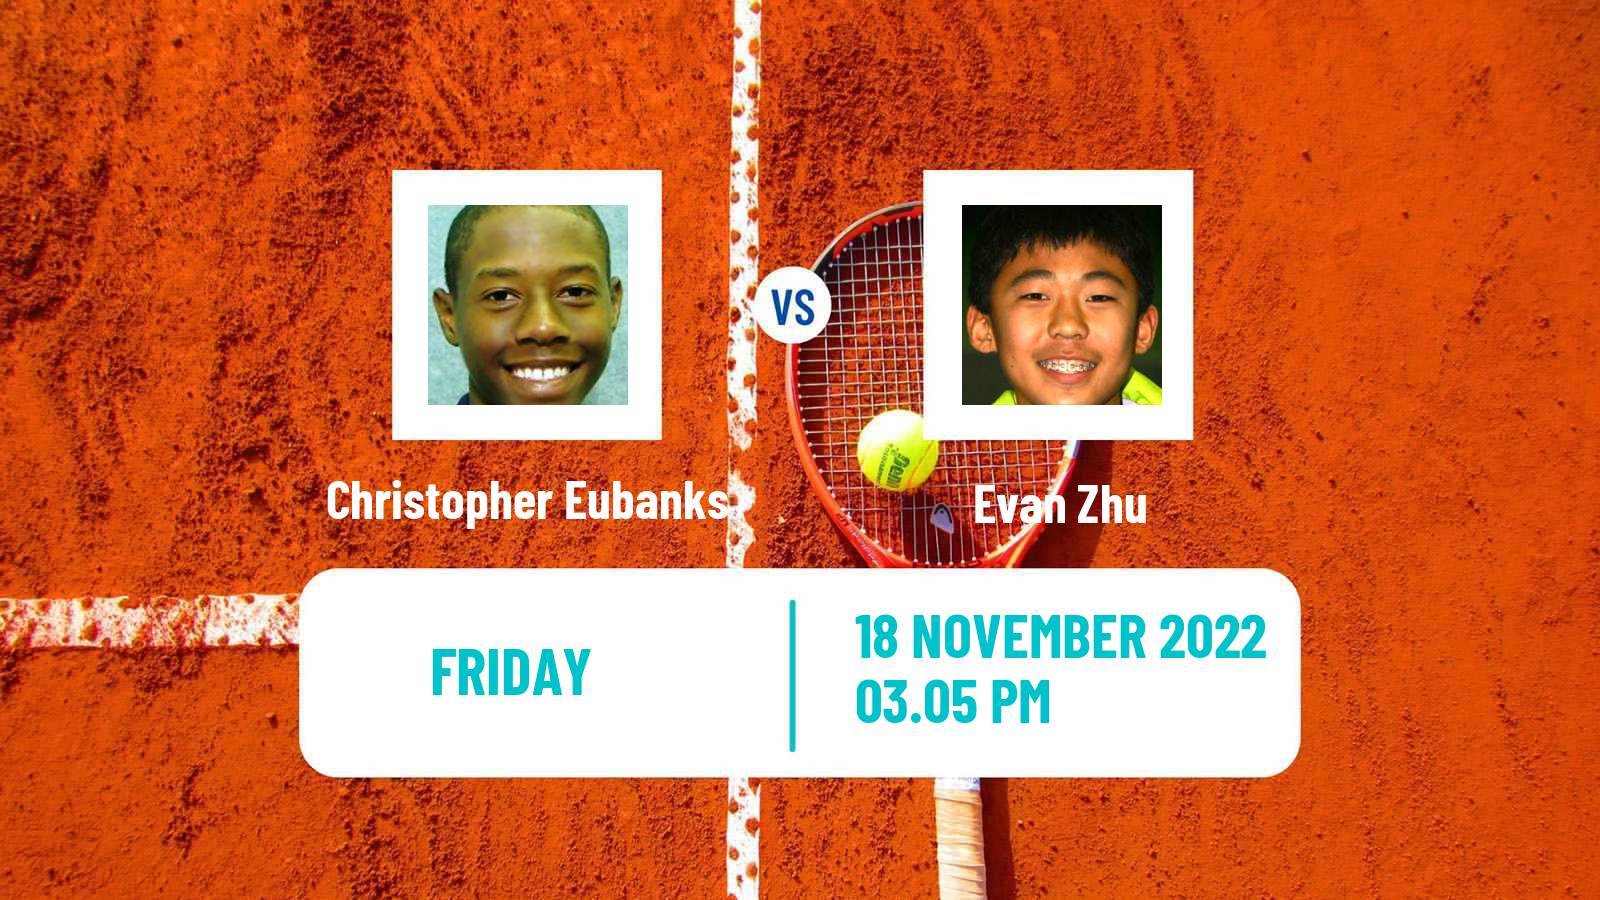 Tennis ATP Challenger Christopher Eubanks - Evan Zhu